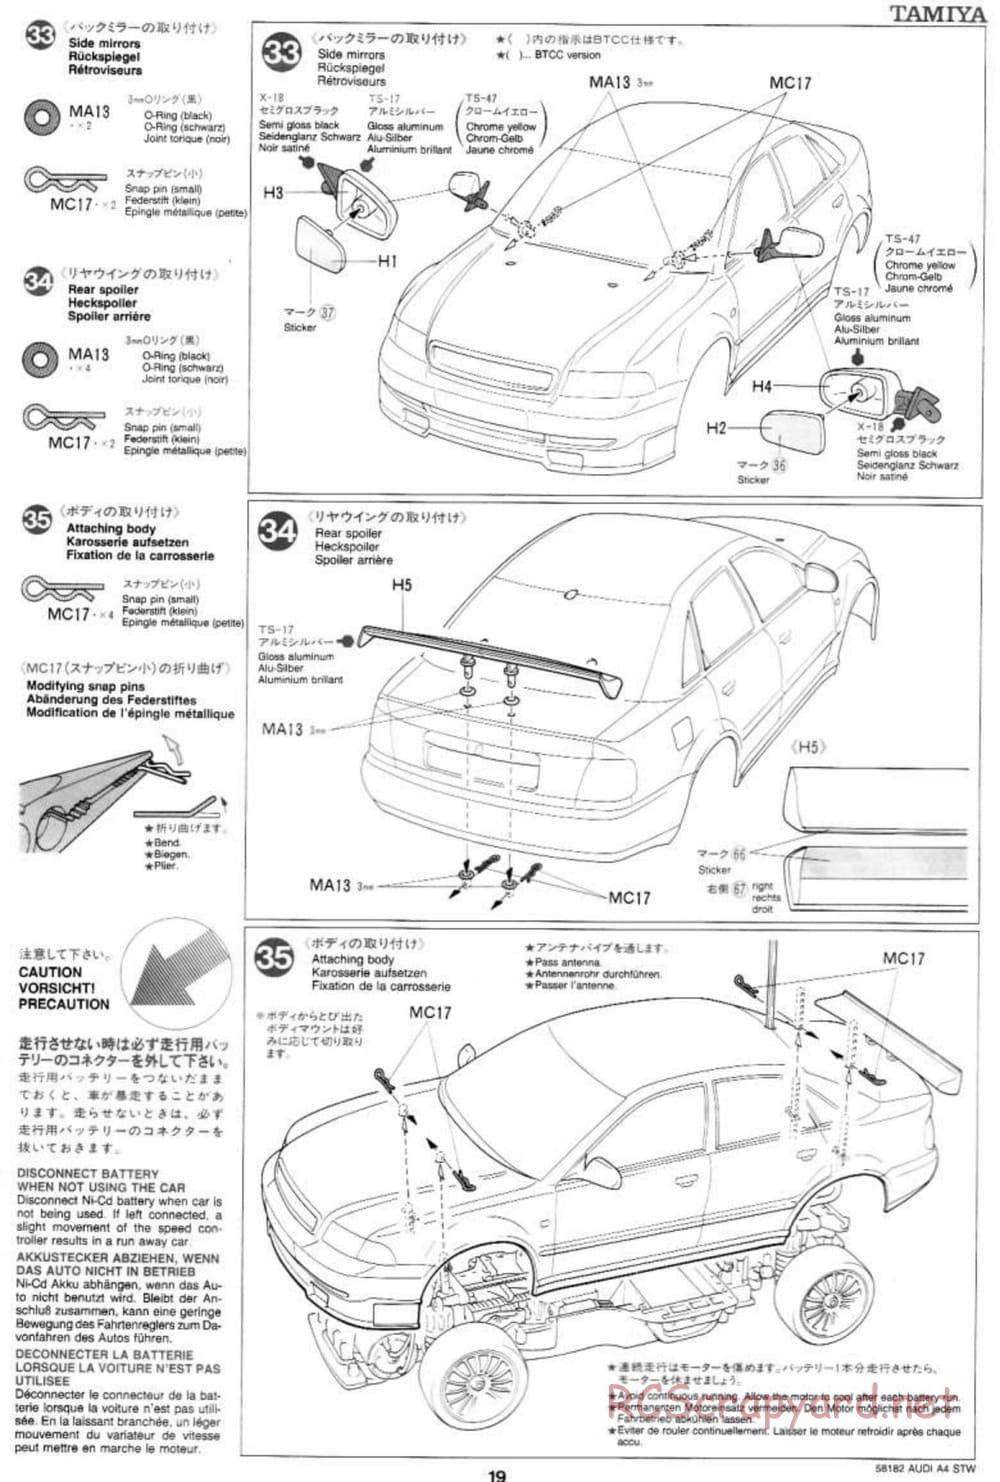 Tamiya - Audi A4 STW - TA-03F Chassis - Manual - Page 19